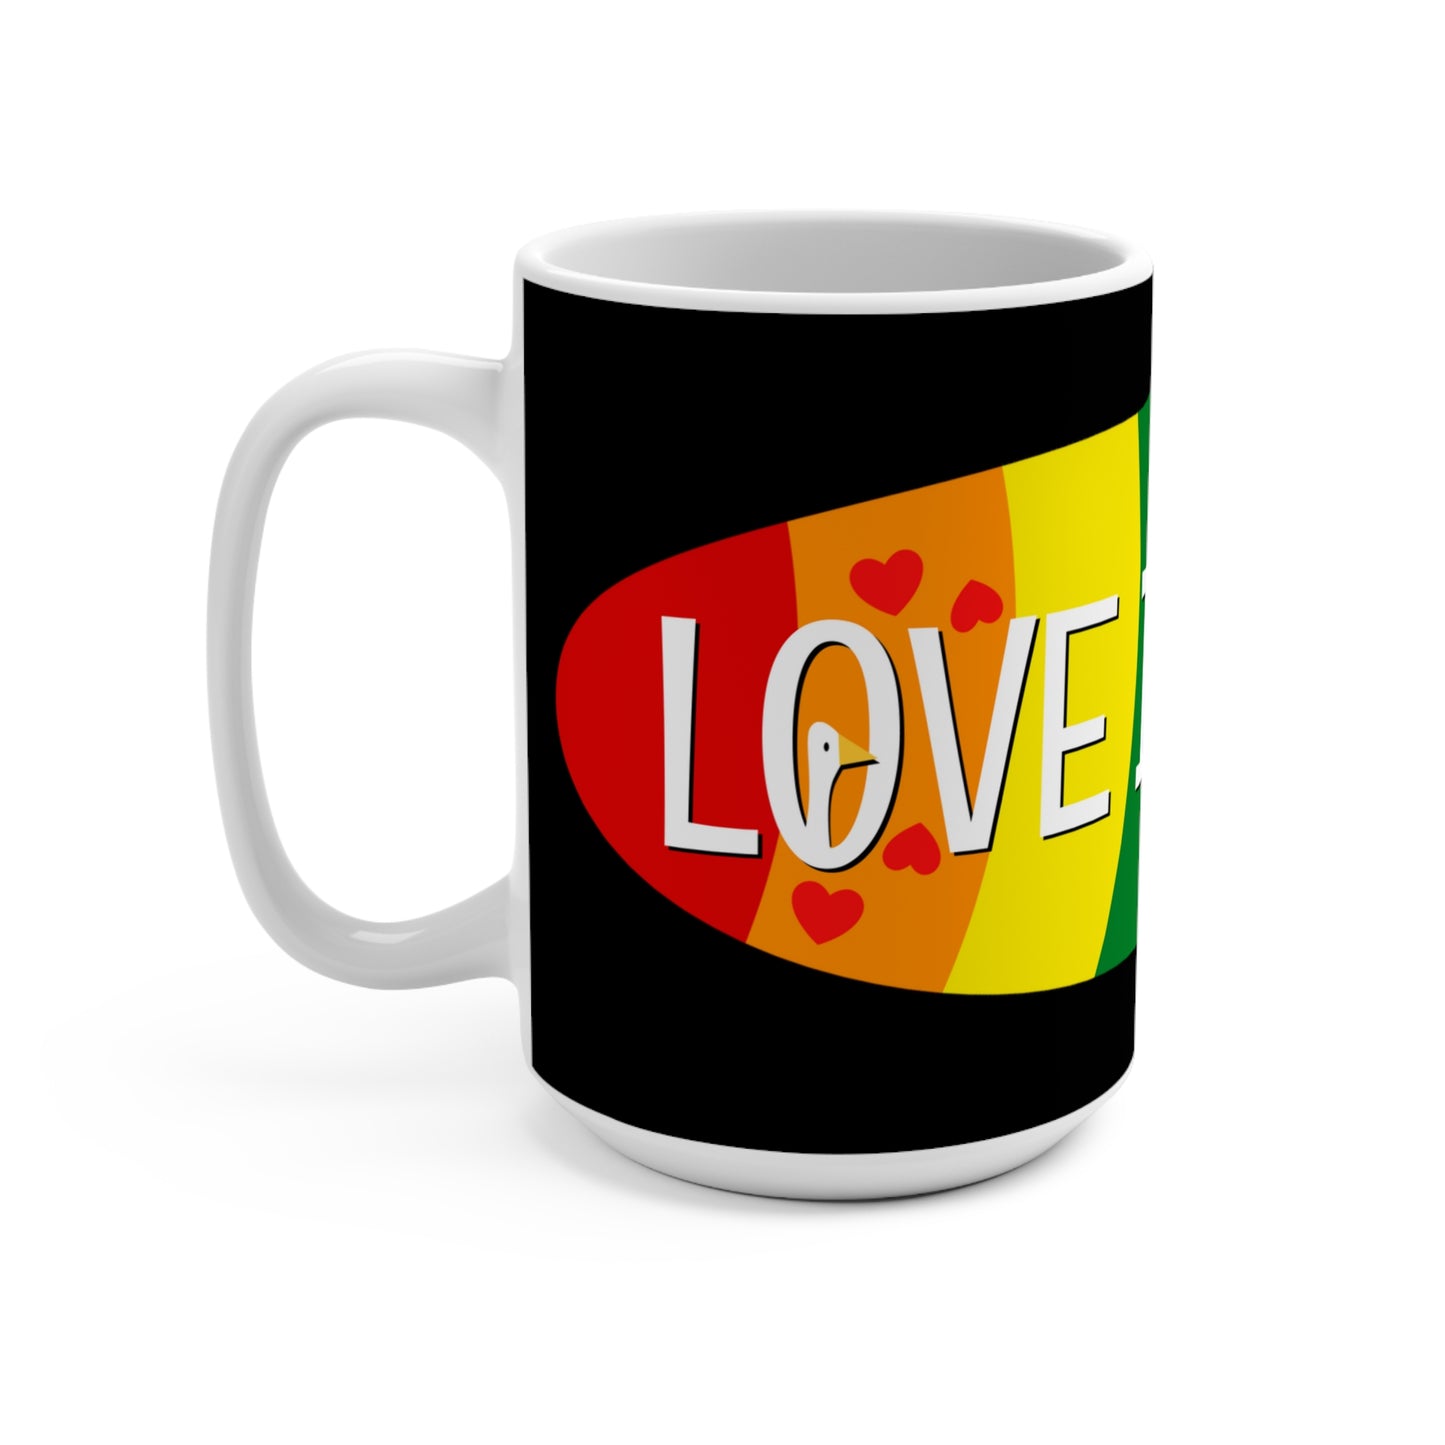 Love is Love - Mug 15oz